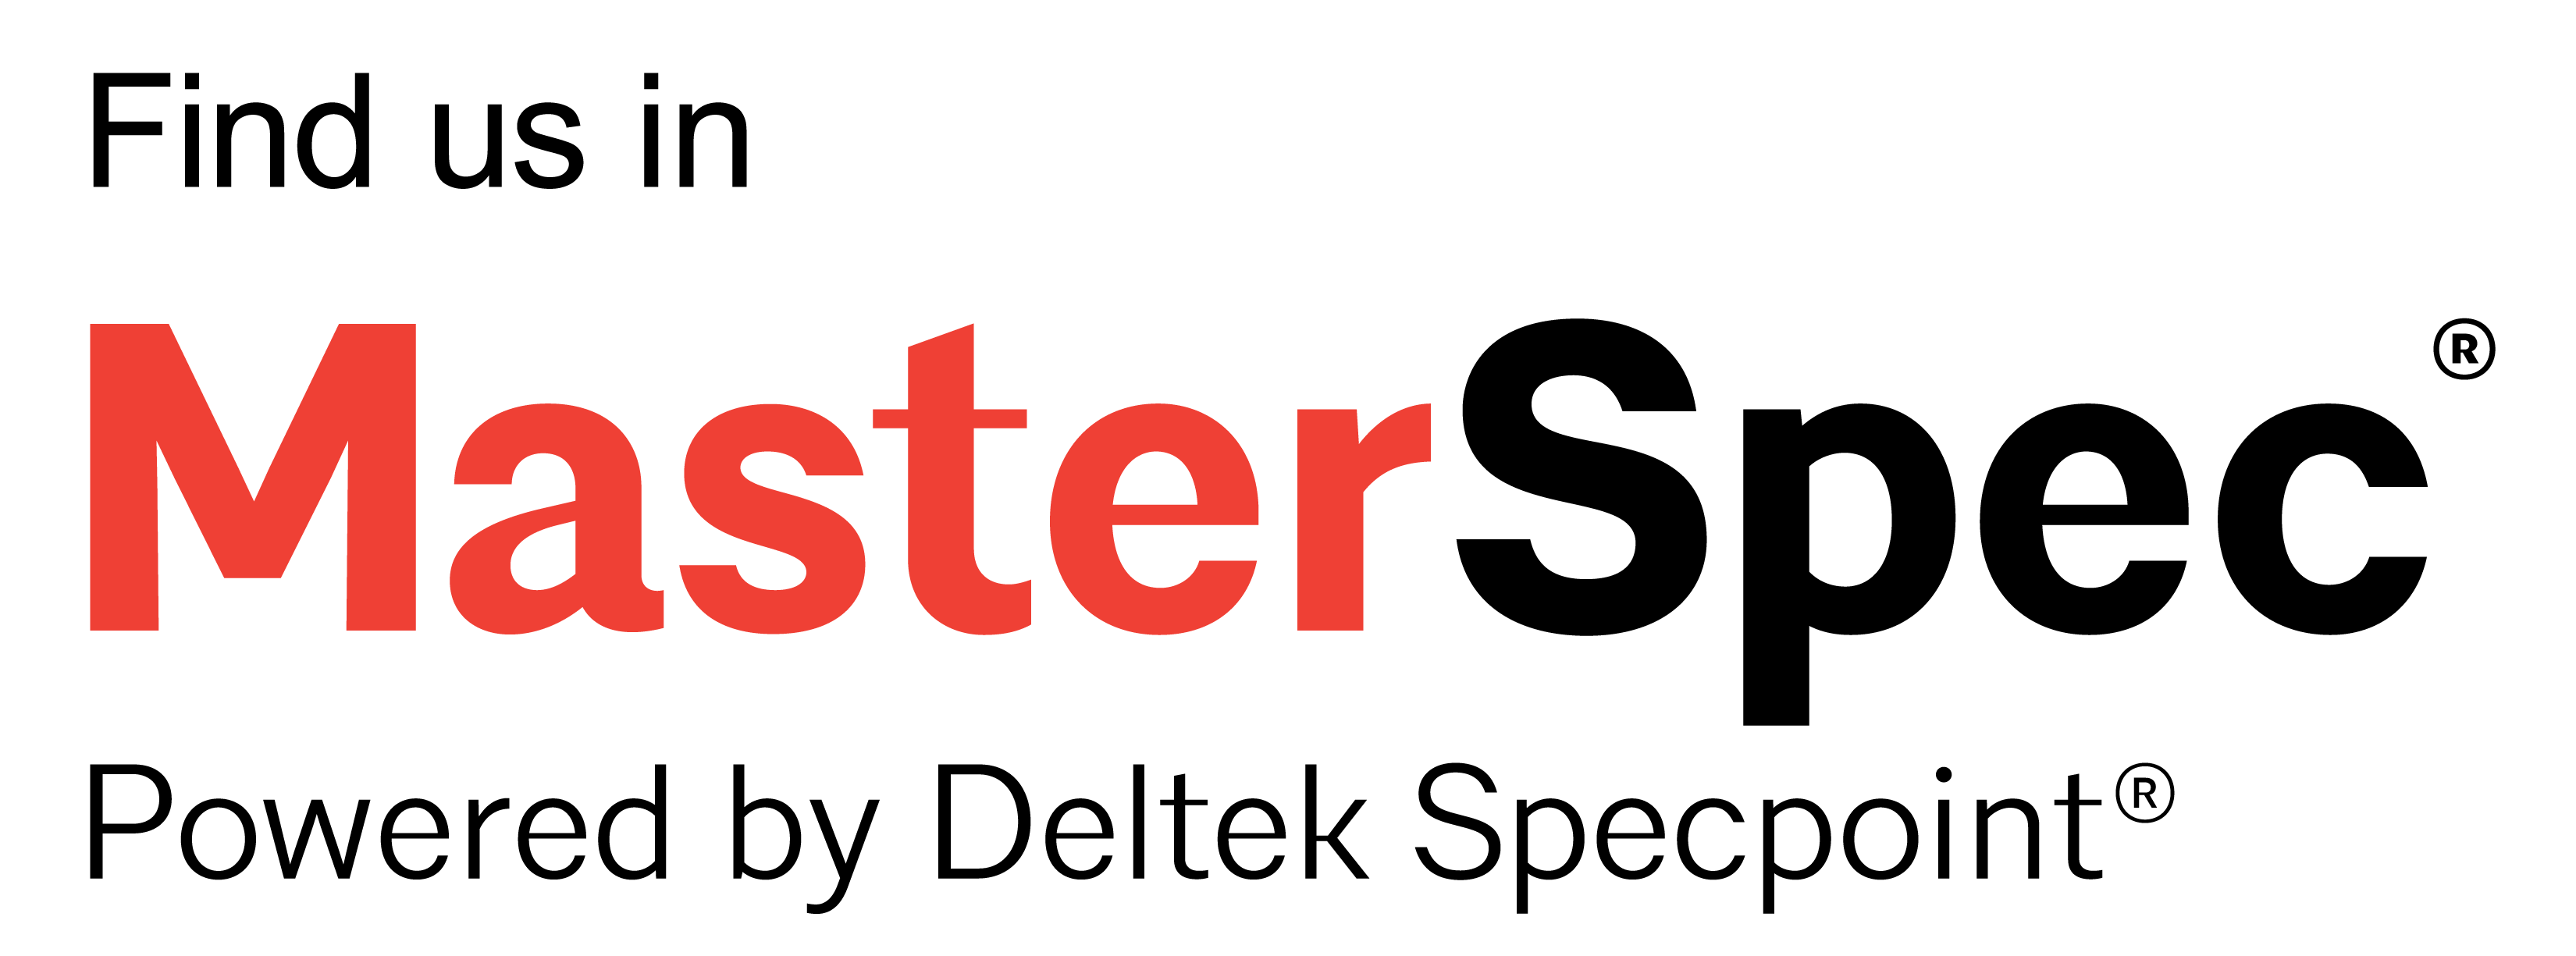 AIA FindUsIn MasterSpec Deltek Specpoint 2c completo CMYK 01